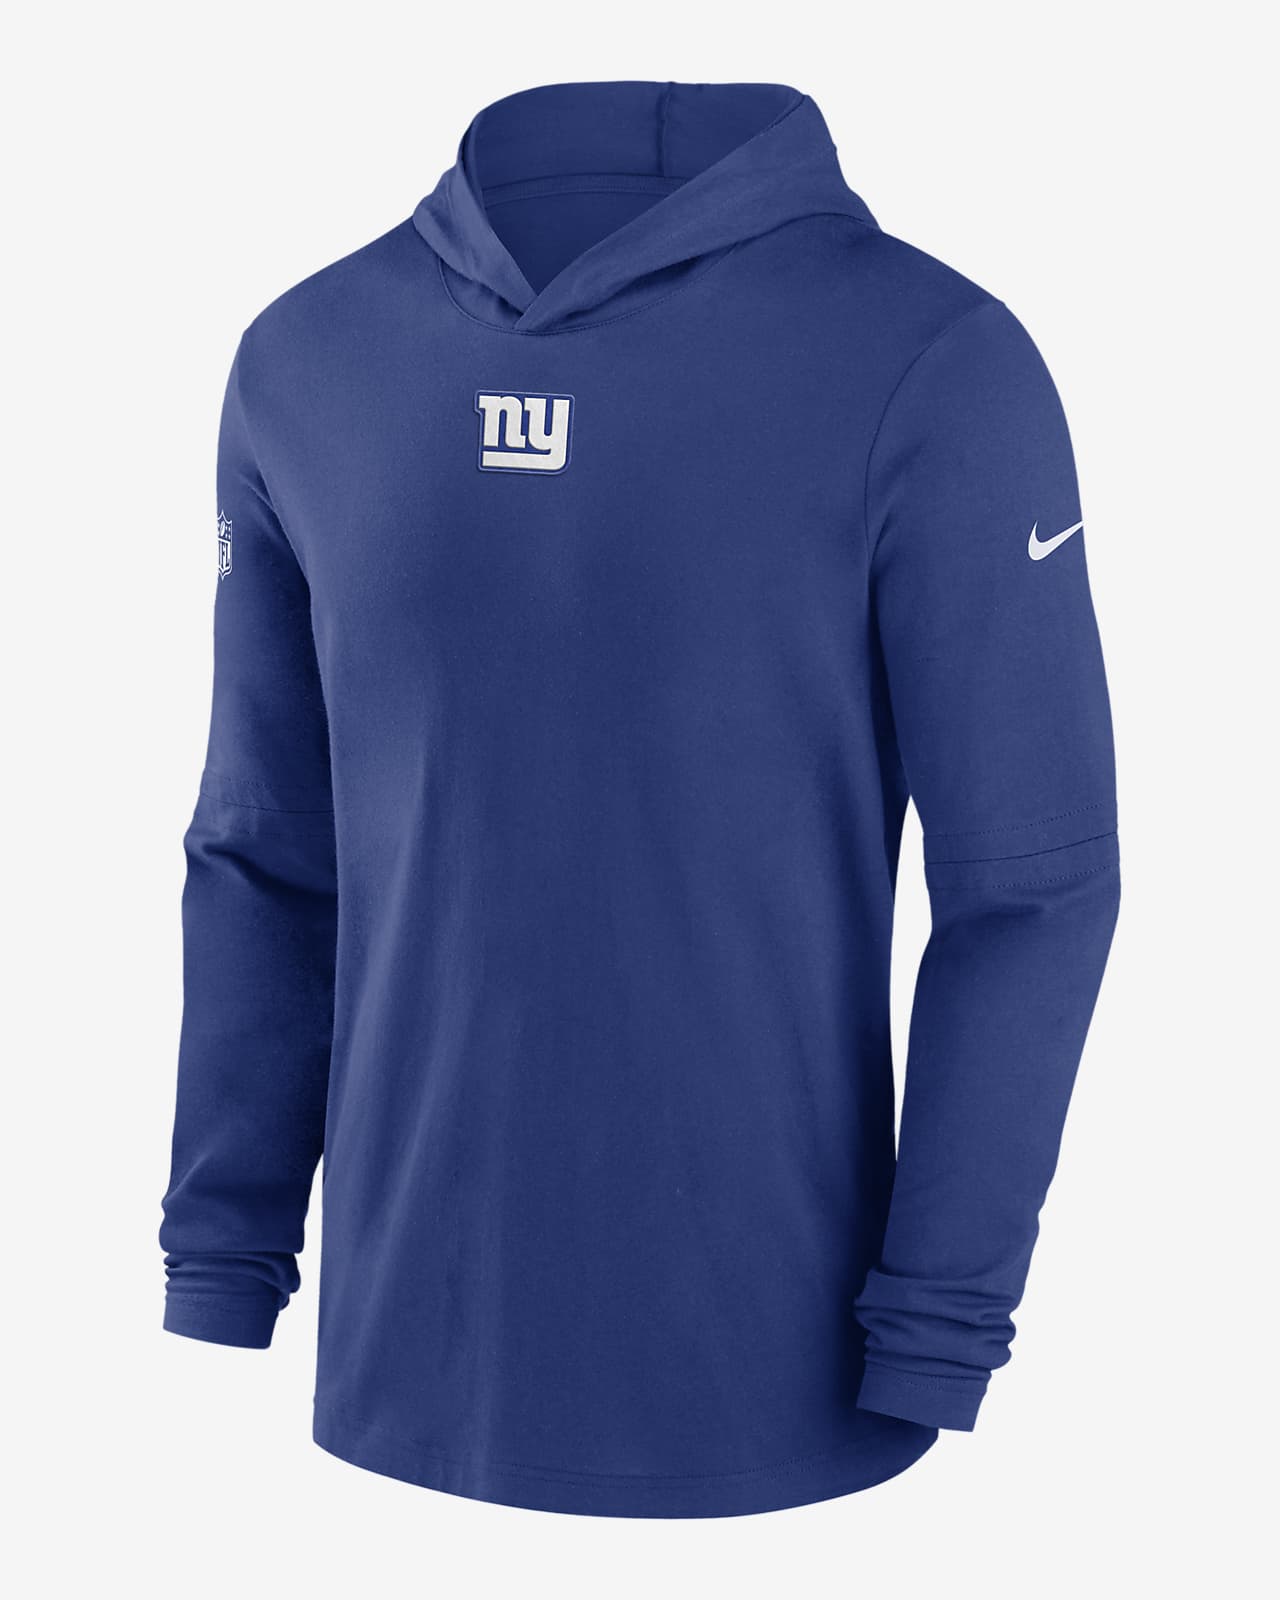 New York Giants Sideline Men’s Nike Dri-FIT NFL Long-Sleeve Hooded Top